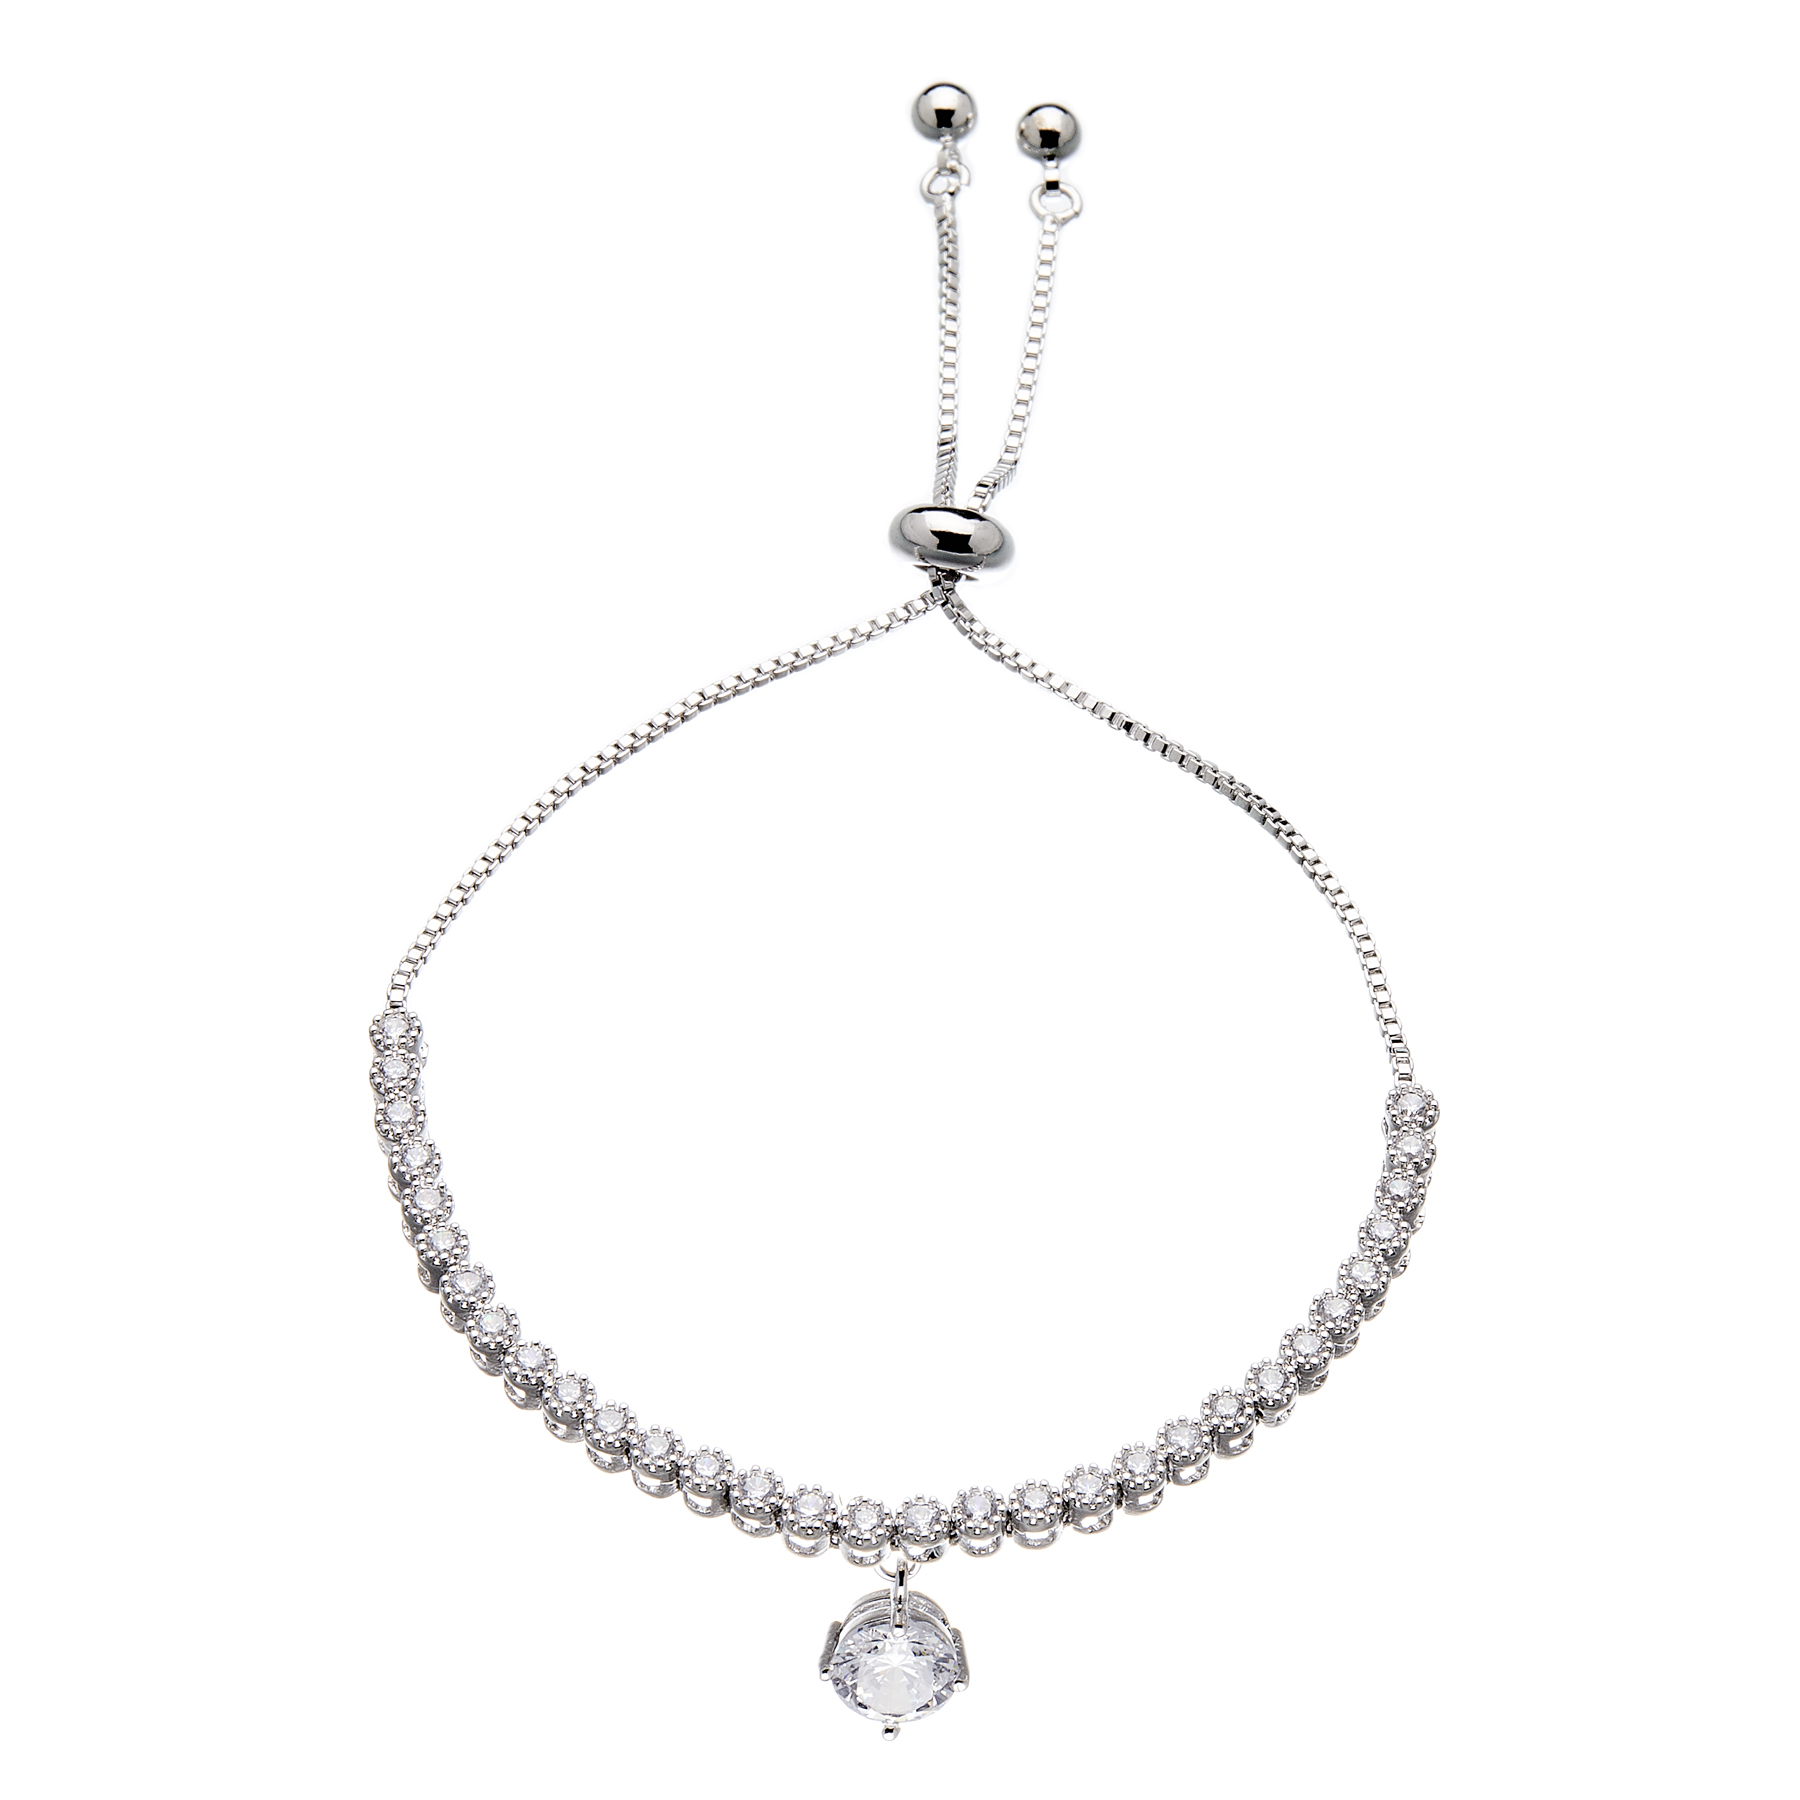 Silver Bracelet - adjustable sliding clasp with a drop Cubic Zirconia stone - Nea